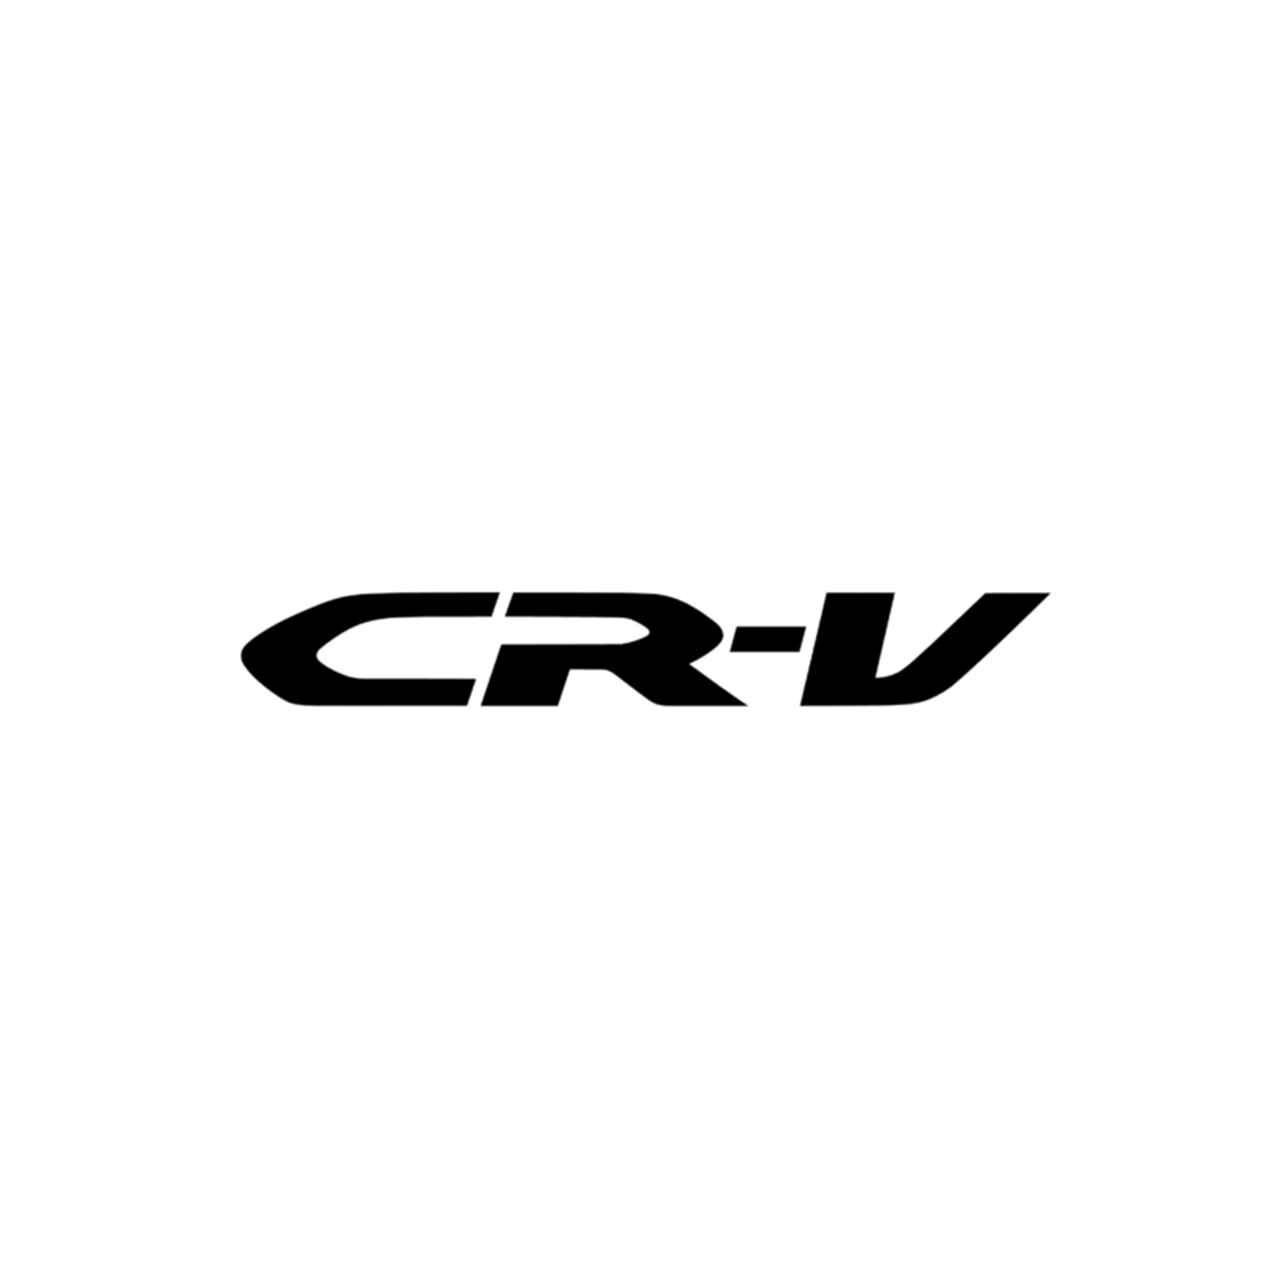 Honda CR-V Logo - Honda Cr V Ecriture Vinyl Decal BallzBeatz. com. Aftermarket